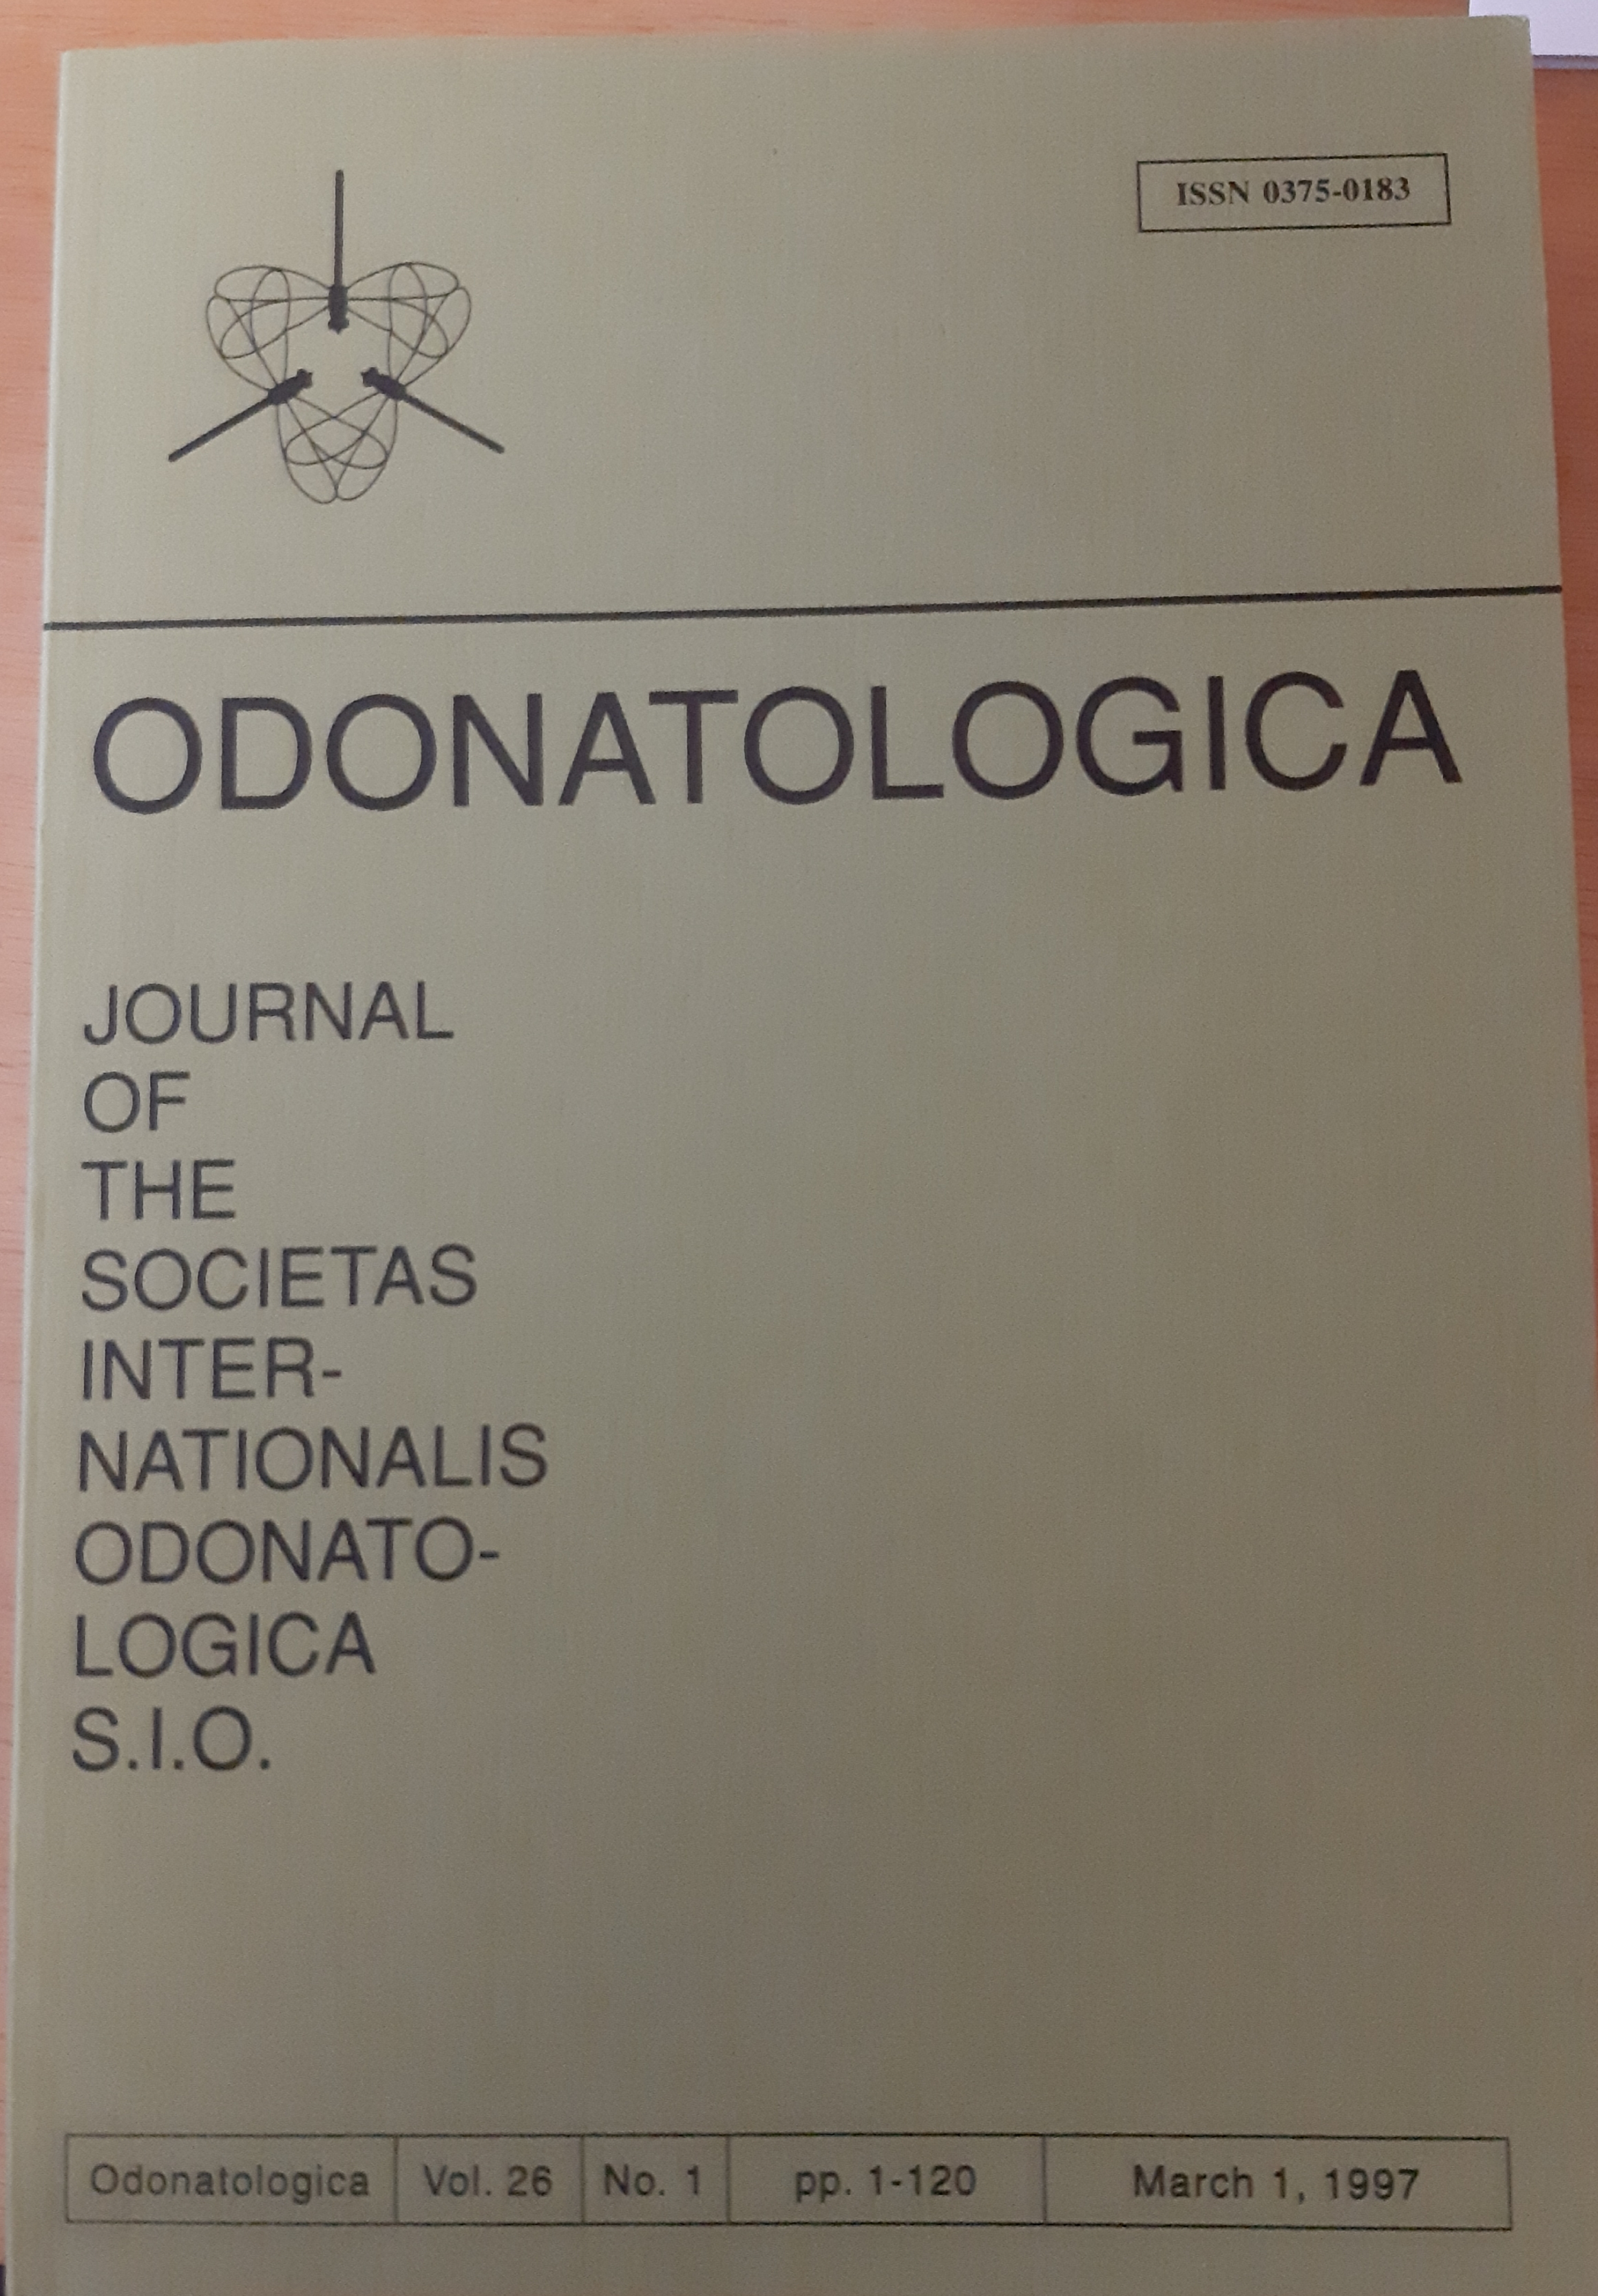 Odonatologica 1997/26. évf. 1. szám Journal of the Societas Internationalis Odonatologica S.I.O. (Rippl-Rónai Múzeum RR-F)